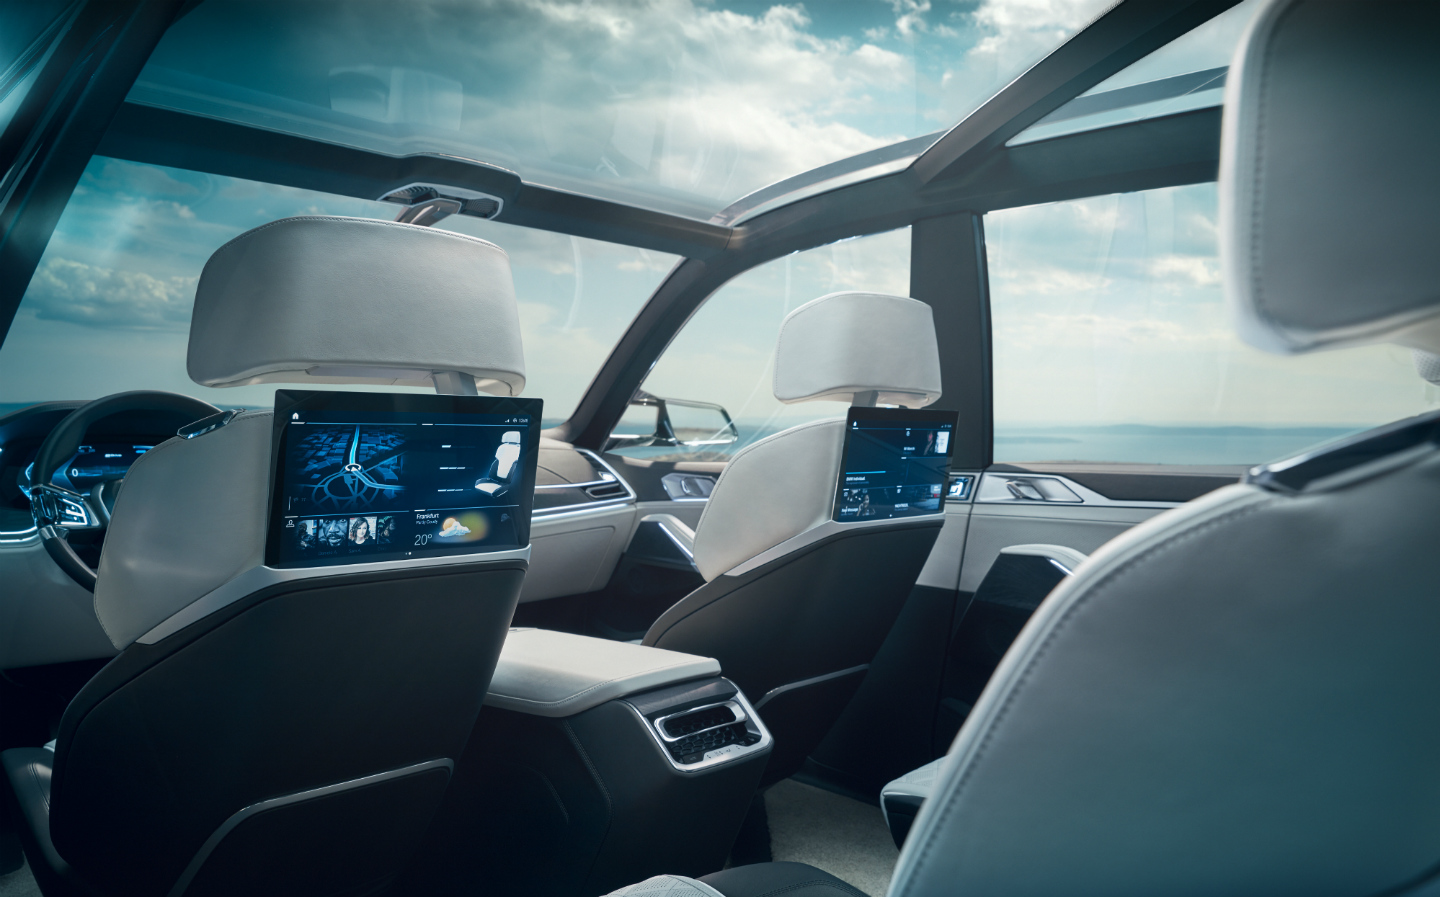 Interior of BMW X7 SUV concept at 2017 Frankfurt motor show